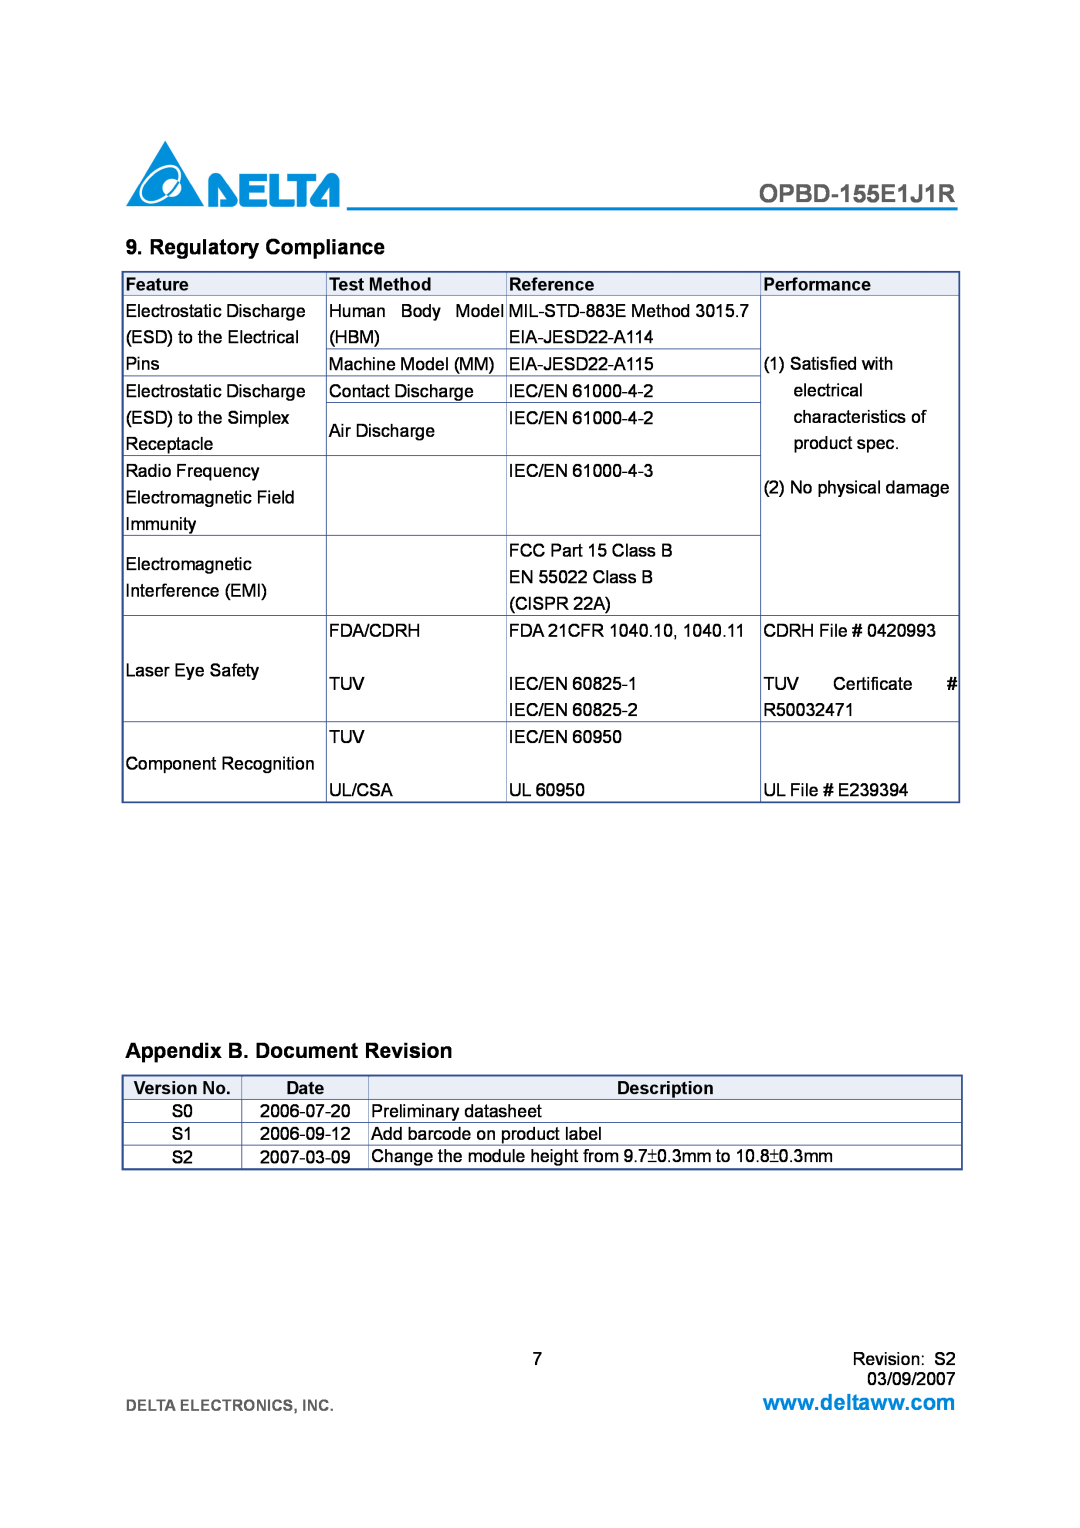 Delta Electronics OPBD-155E1J1R Regulatory Compliance, Appendix B. Document Revision, Feature, Test Method, Reference 